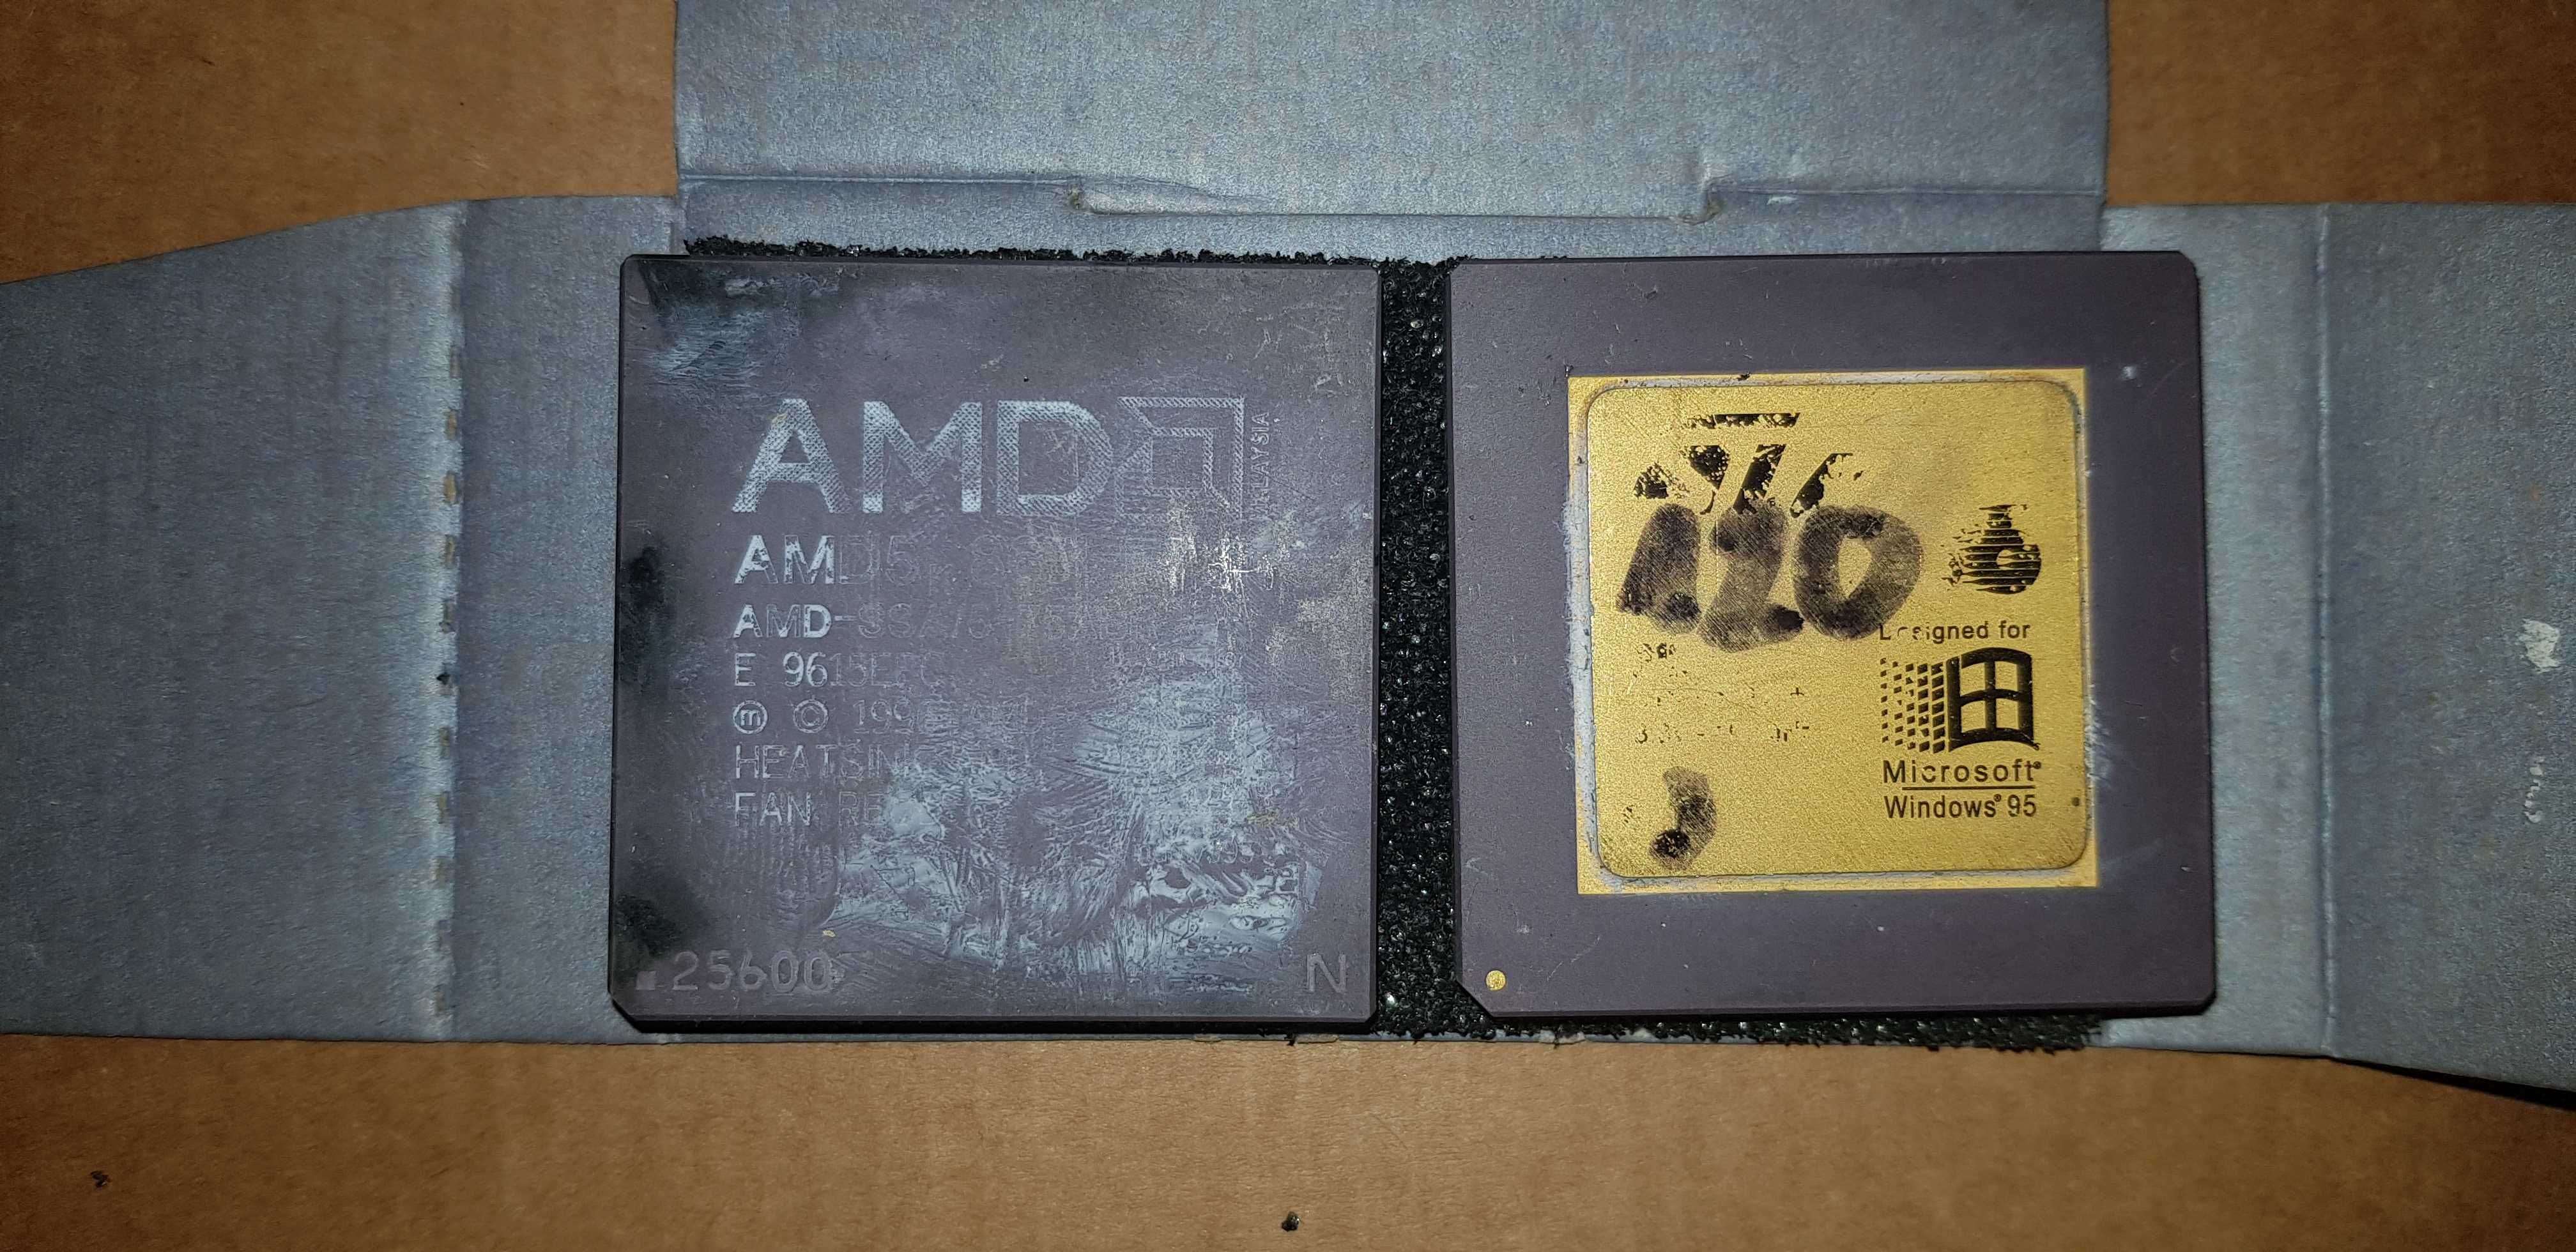 Retro Procesor AMD5k86 P75 75 MHz SOCKET 7